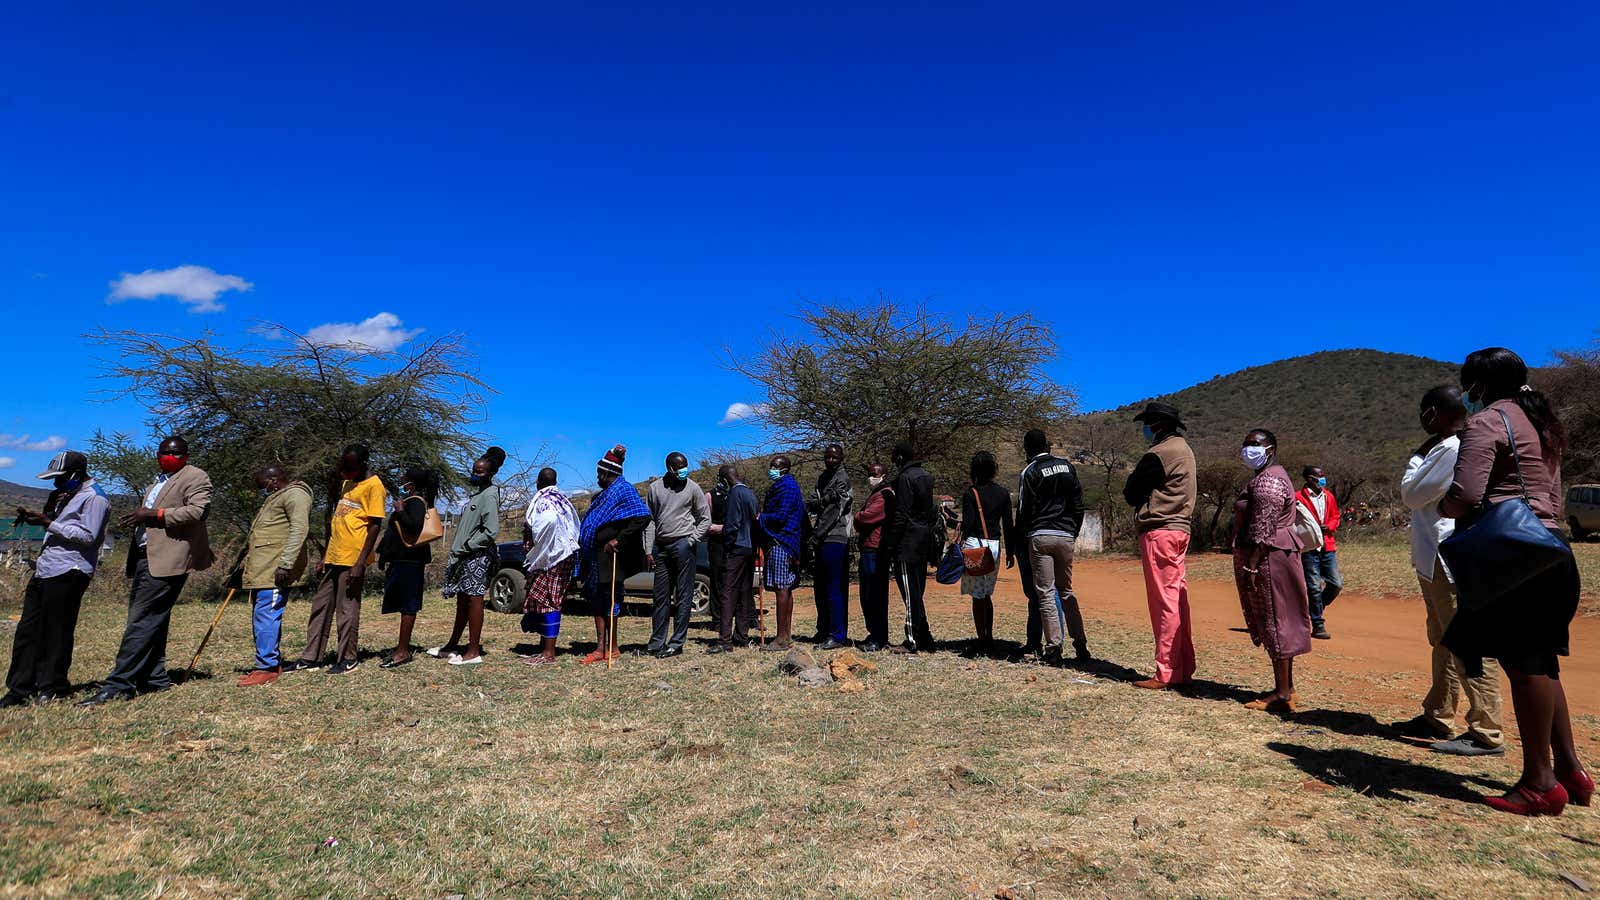 People queue to get vaccinated against covid-19 in Kajiado, Kenya.